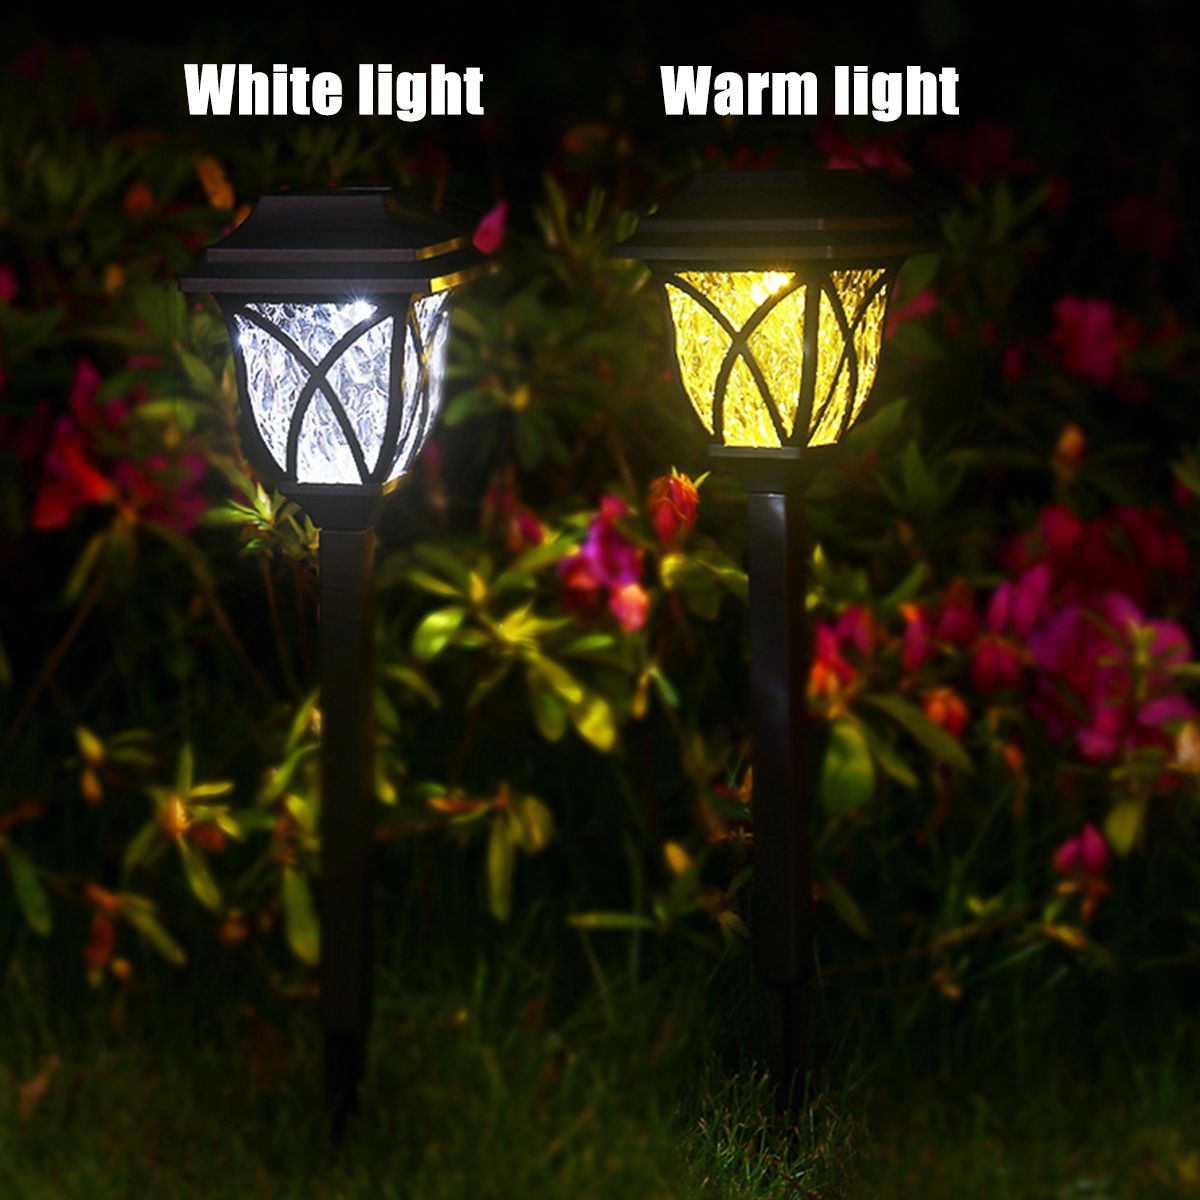 2PCS-Auto-Sensing-LED-Solar-Lamp-Garden-Lamps-For-Outdoor-Patio-Lawn-1755184